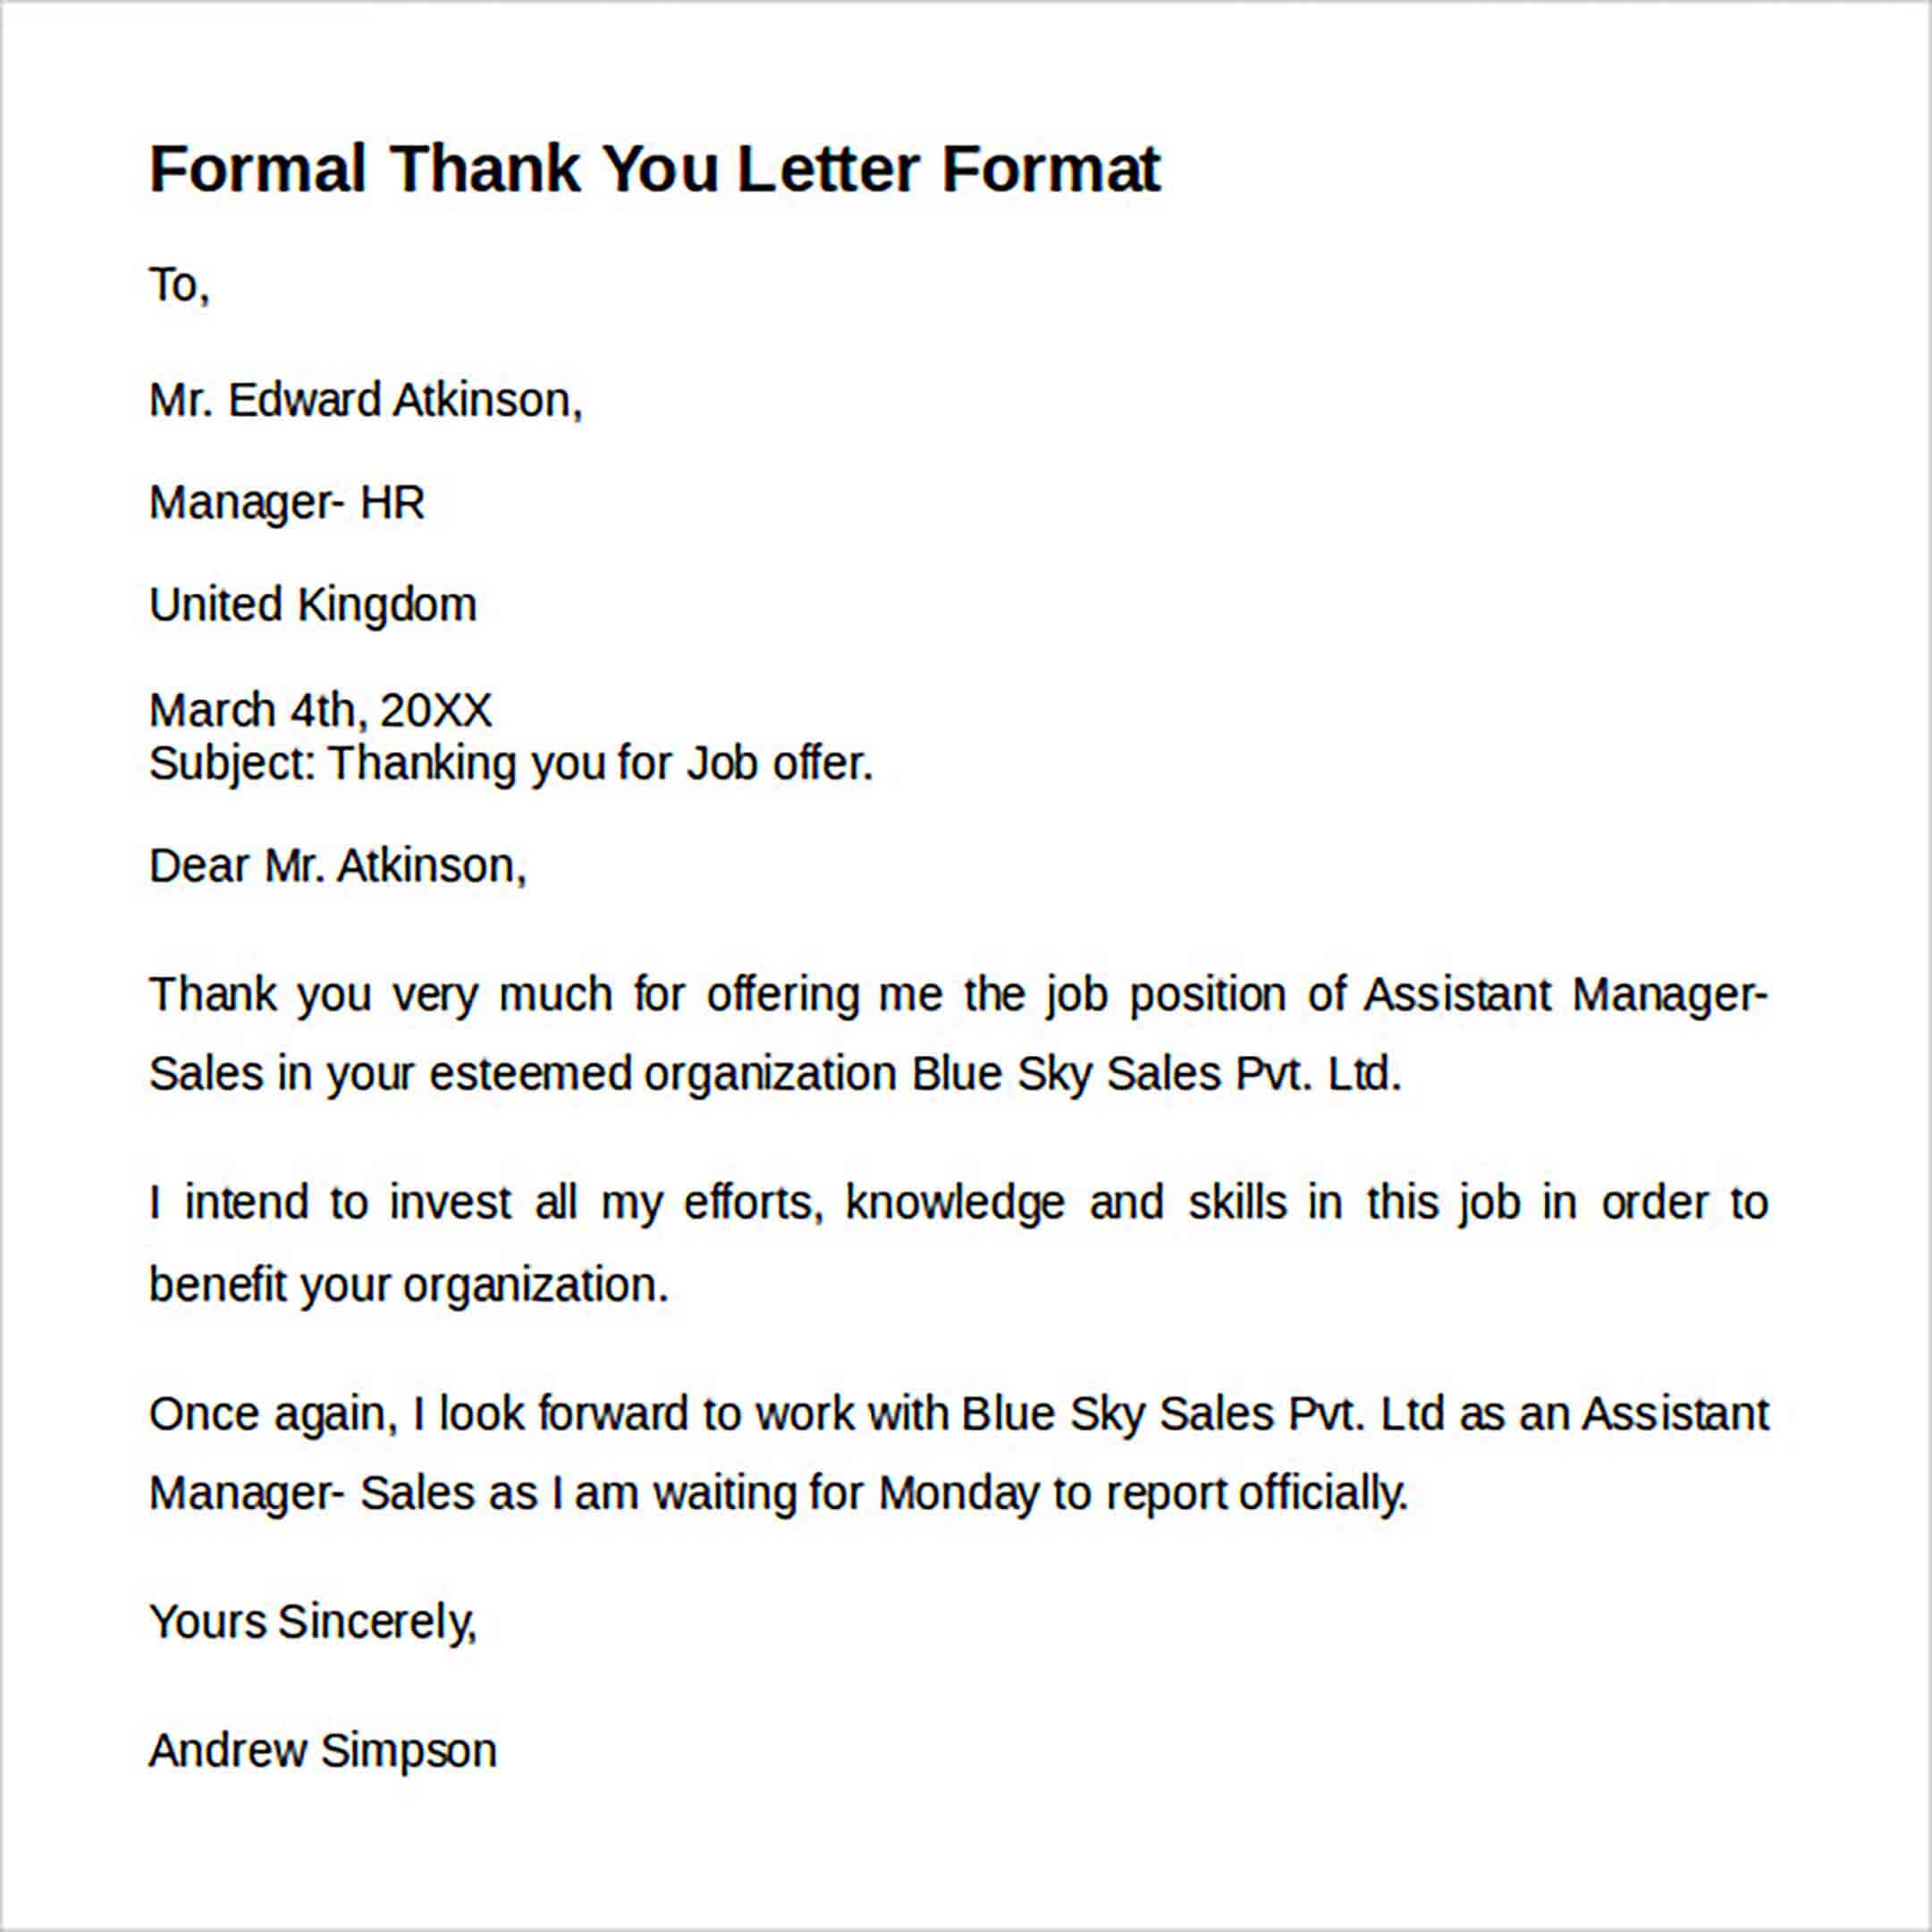 Formal Thank You Letter Format